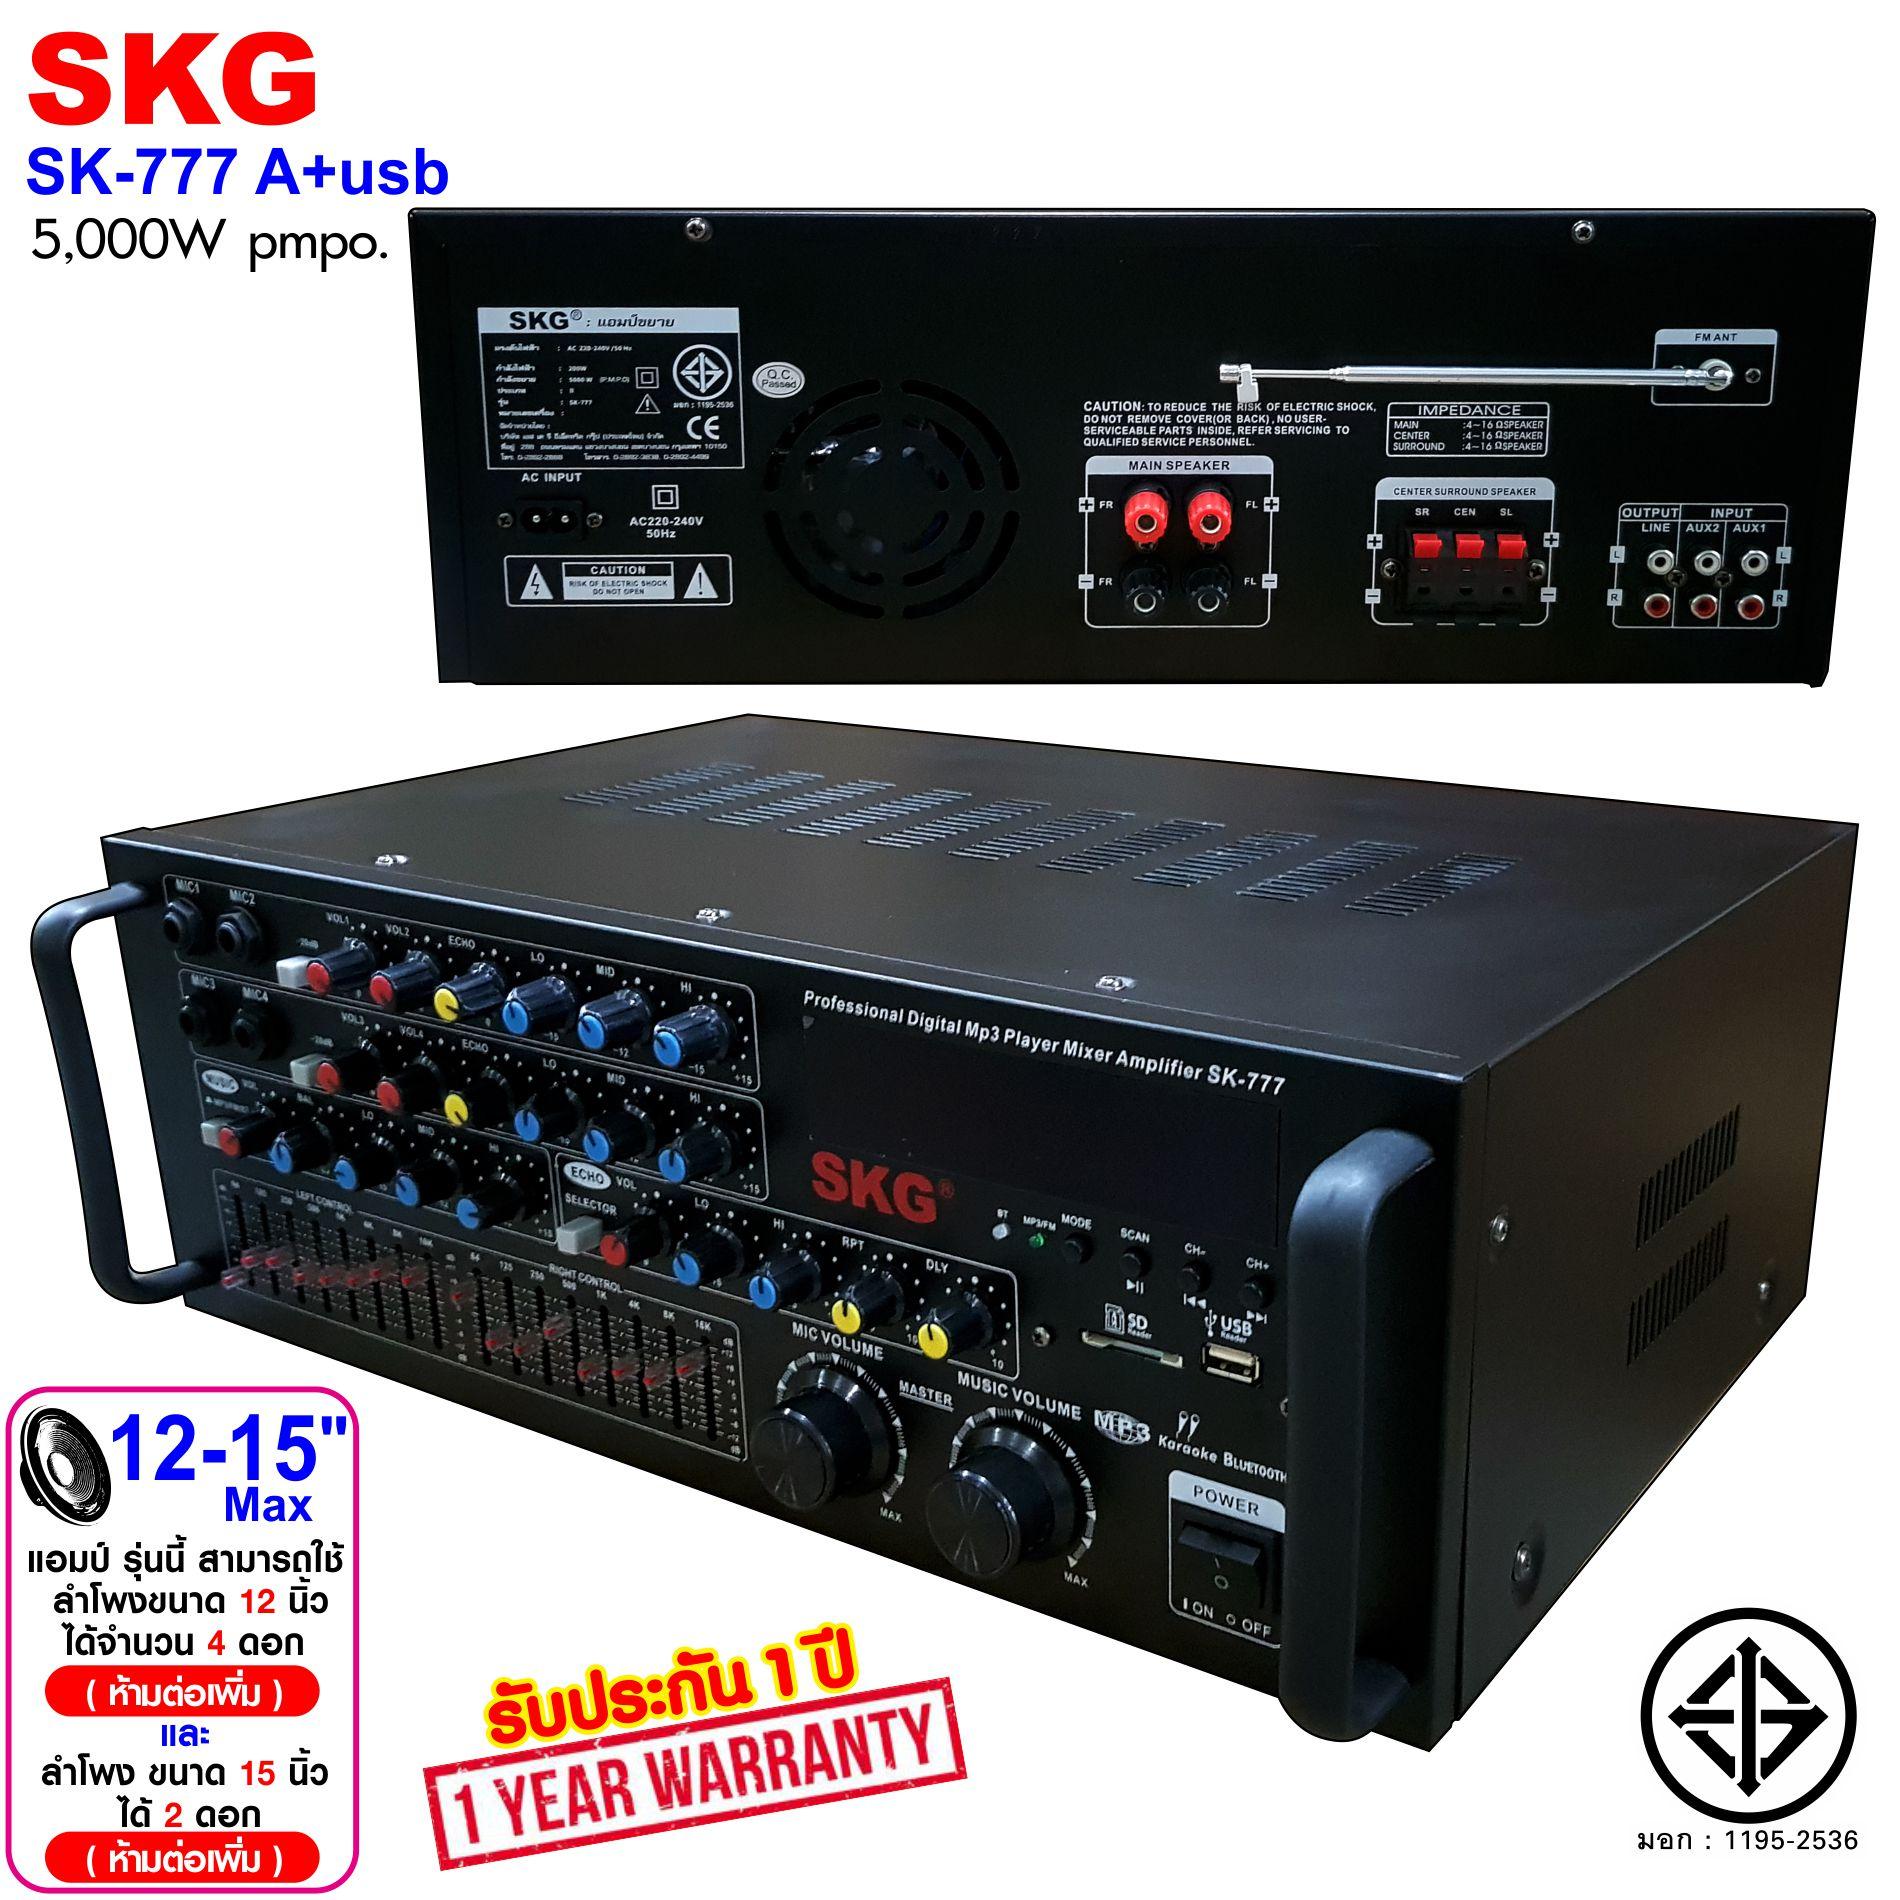 SKG เครื่องแอมป์ขยาย Bluetooth USB 5000w P.M.P.O รุ่น SK-777